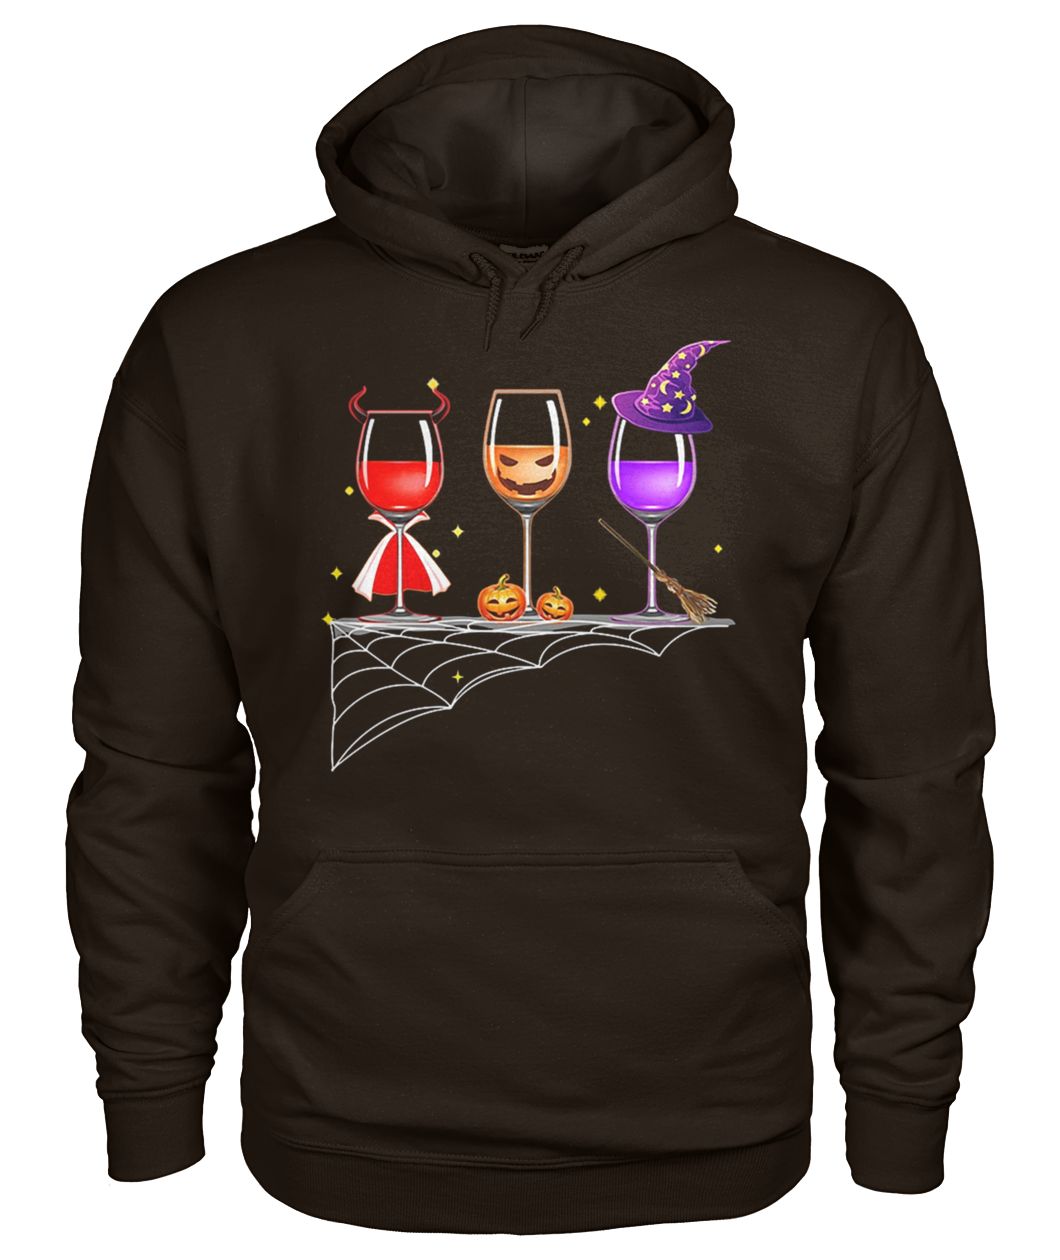 Three glasses of wine halloween gildan hoodie